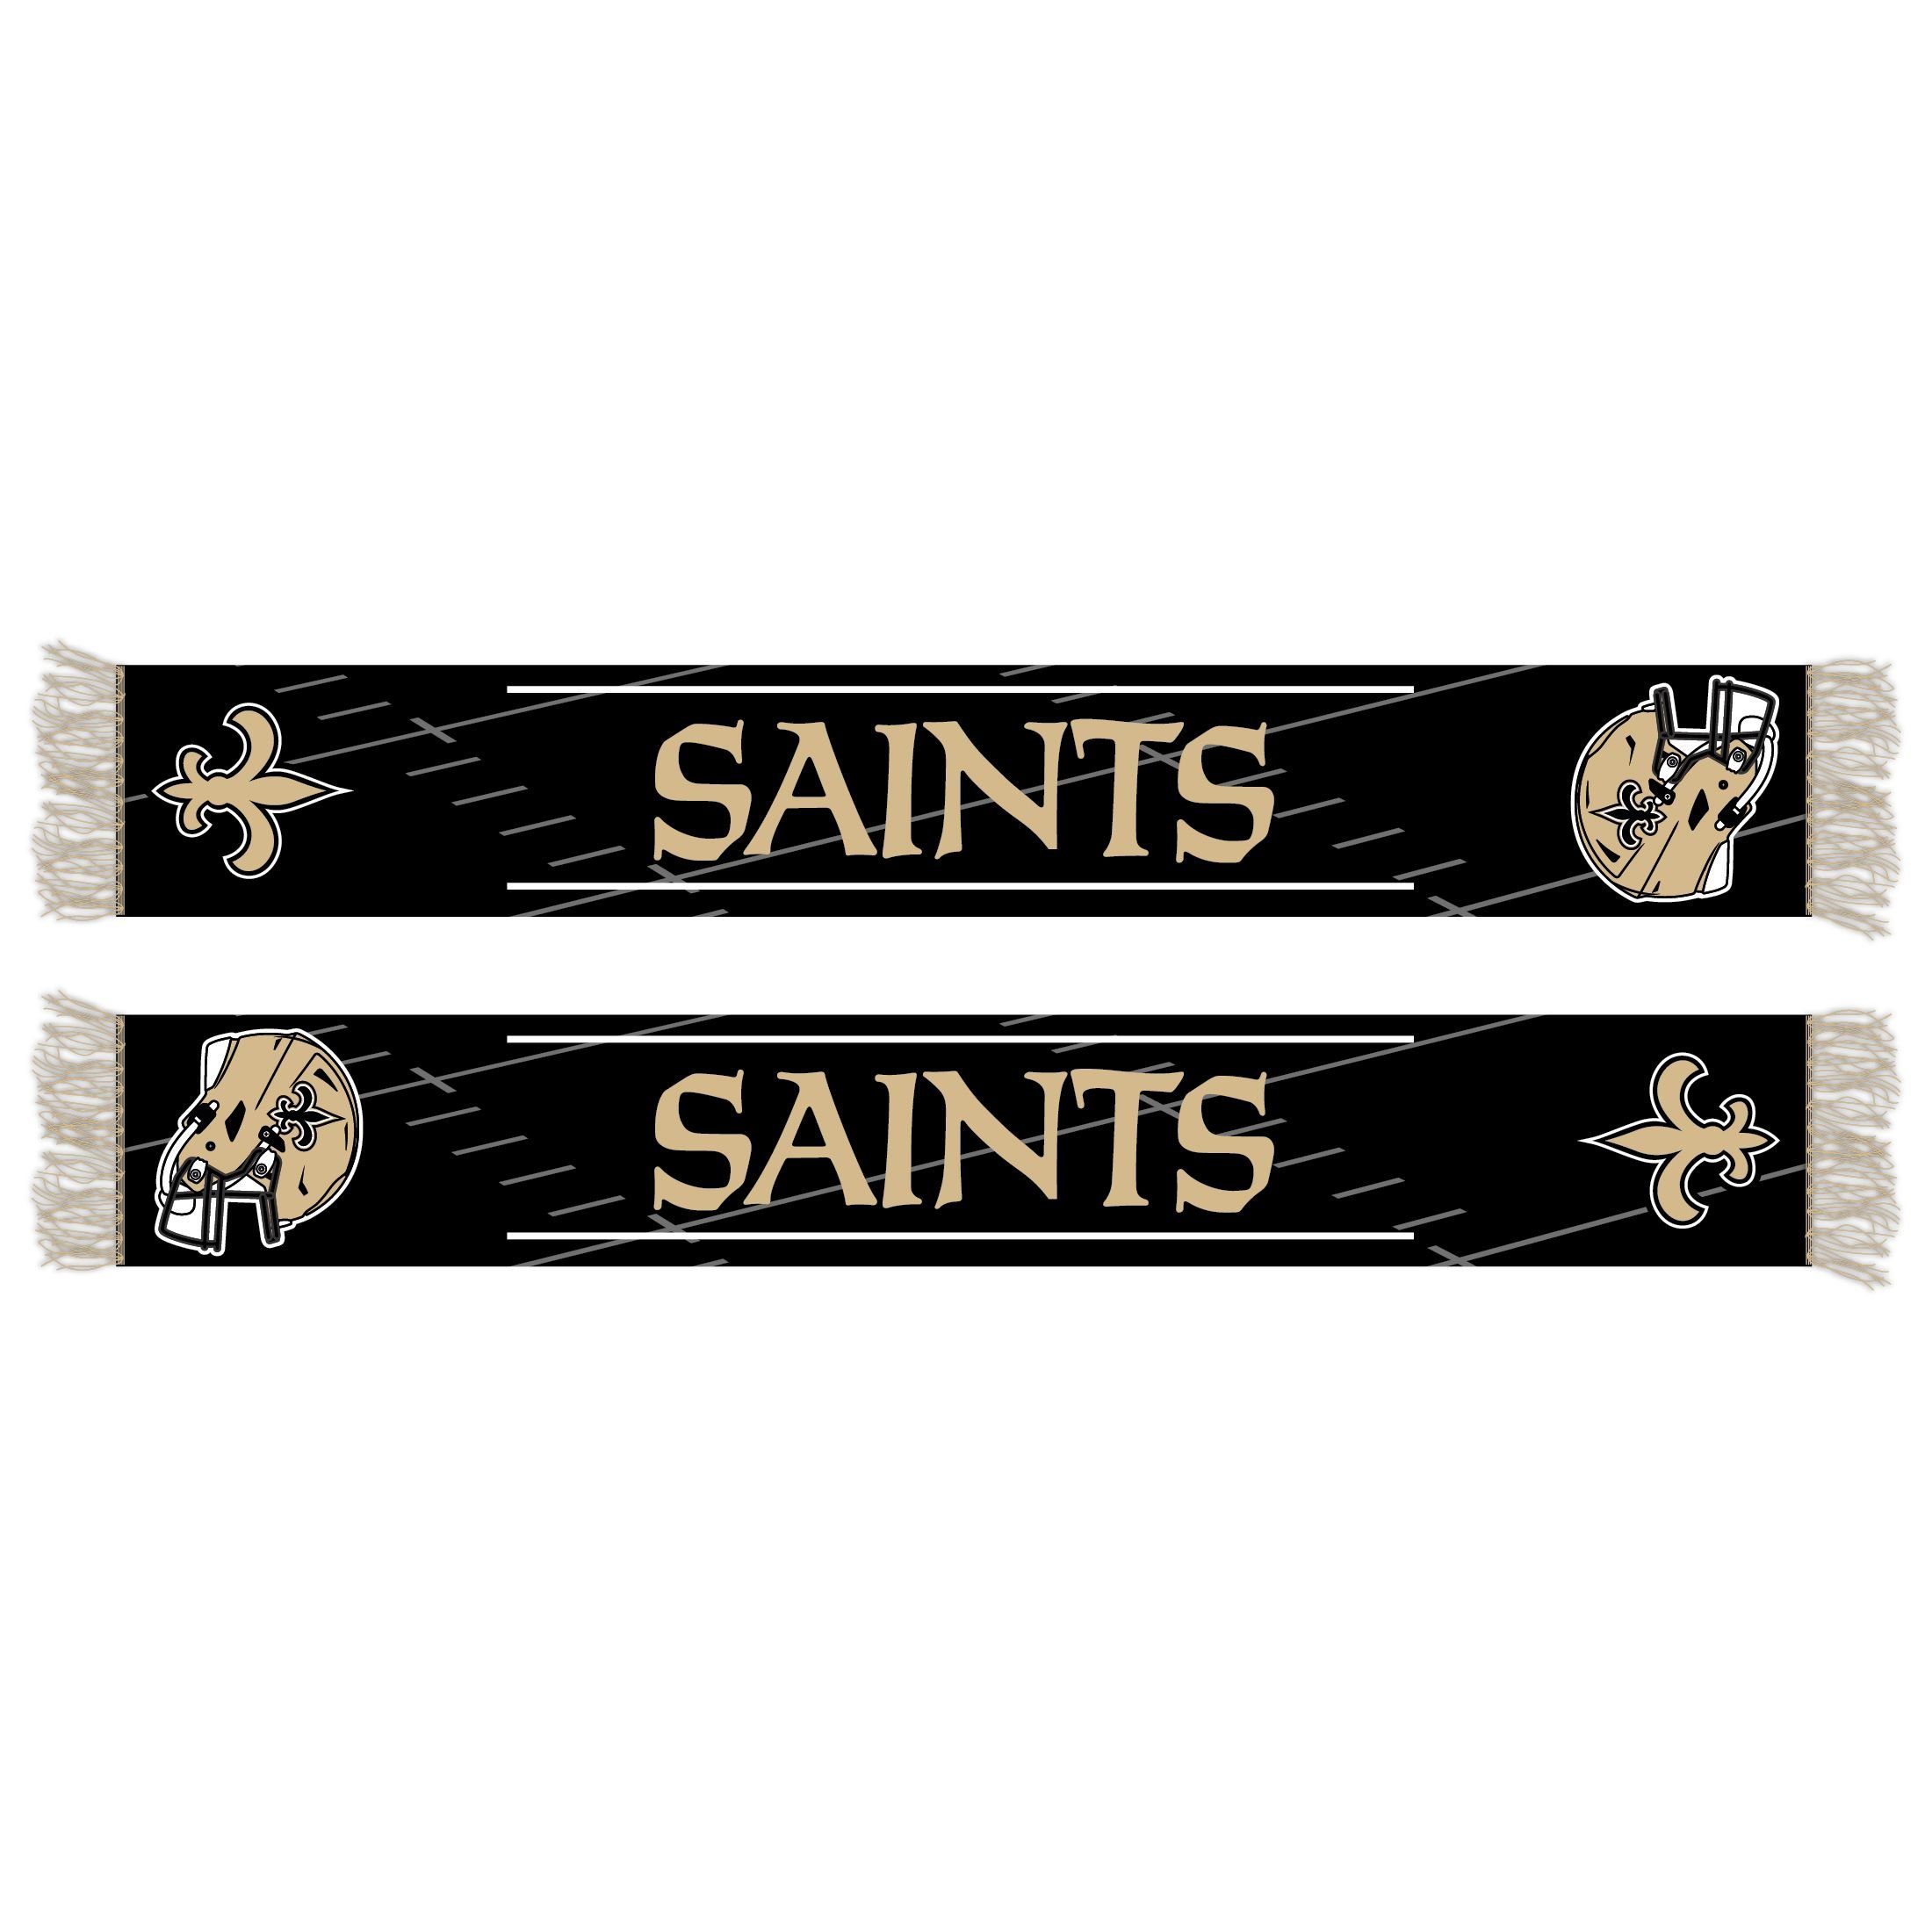 Great Branding New Multifunktionstuch Great Teams NFL Saints Orleans Branding